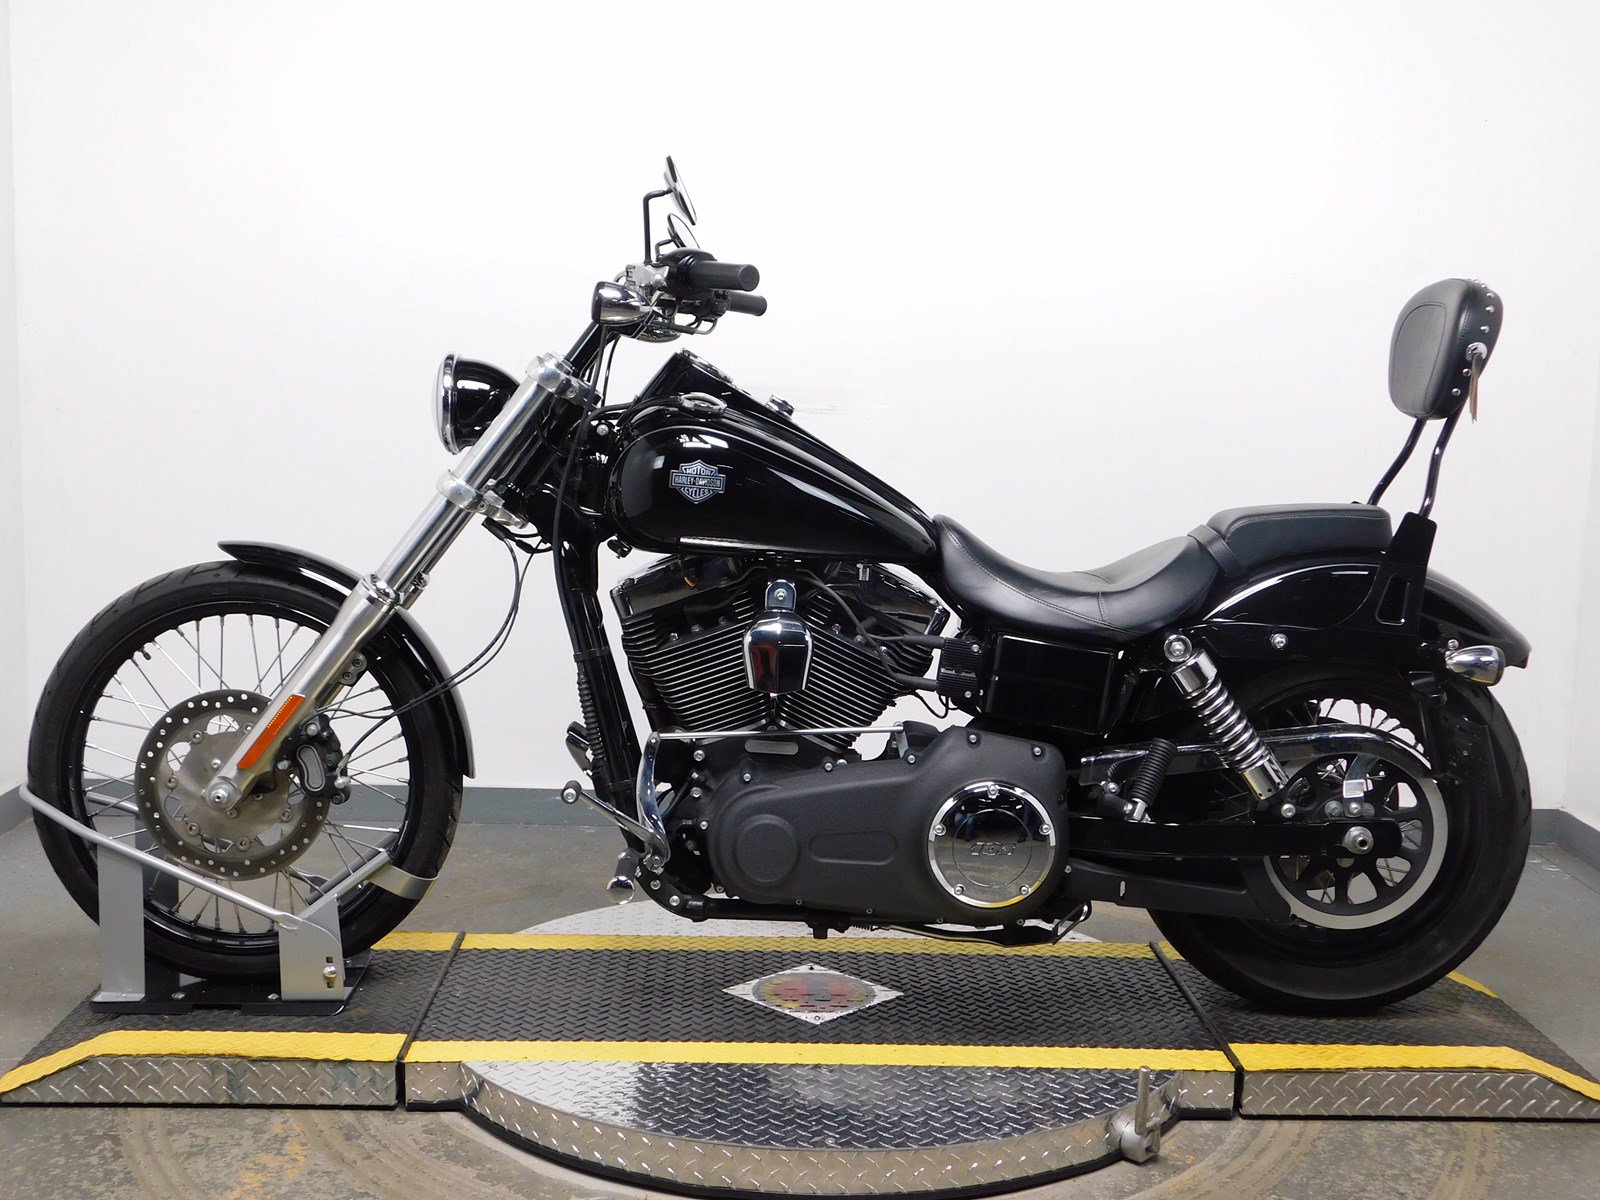 New 2016 Harley-Davidson Dyna Wide Glide FXDWG Dyna in Taylor #U303618 ...